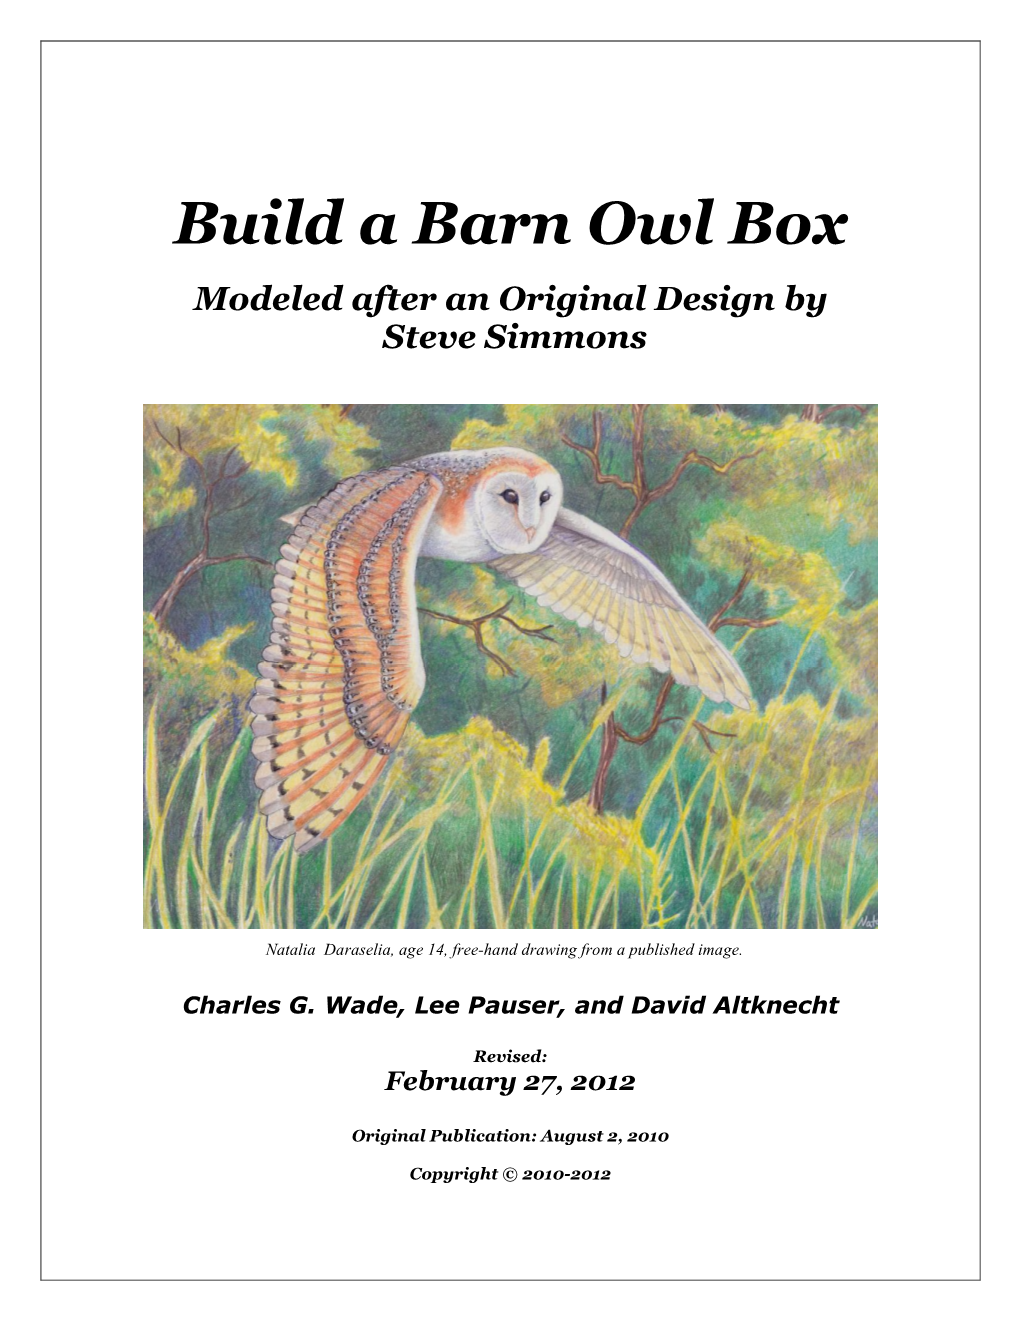 Build a Barn Owl Box Modeled After an Original Design by Steve Simmons